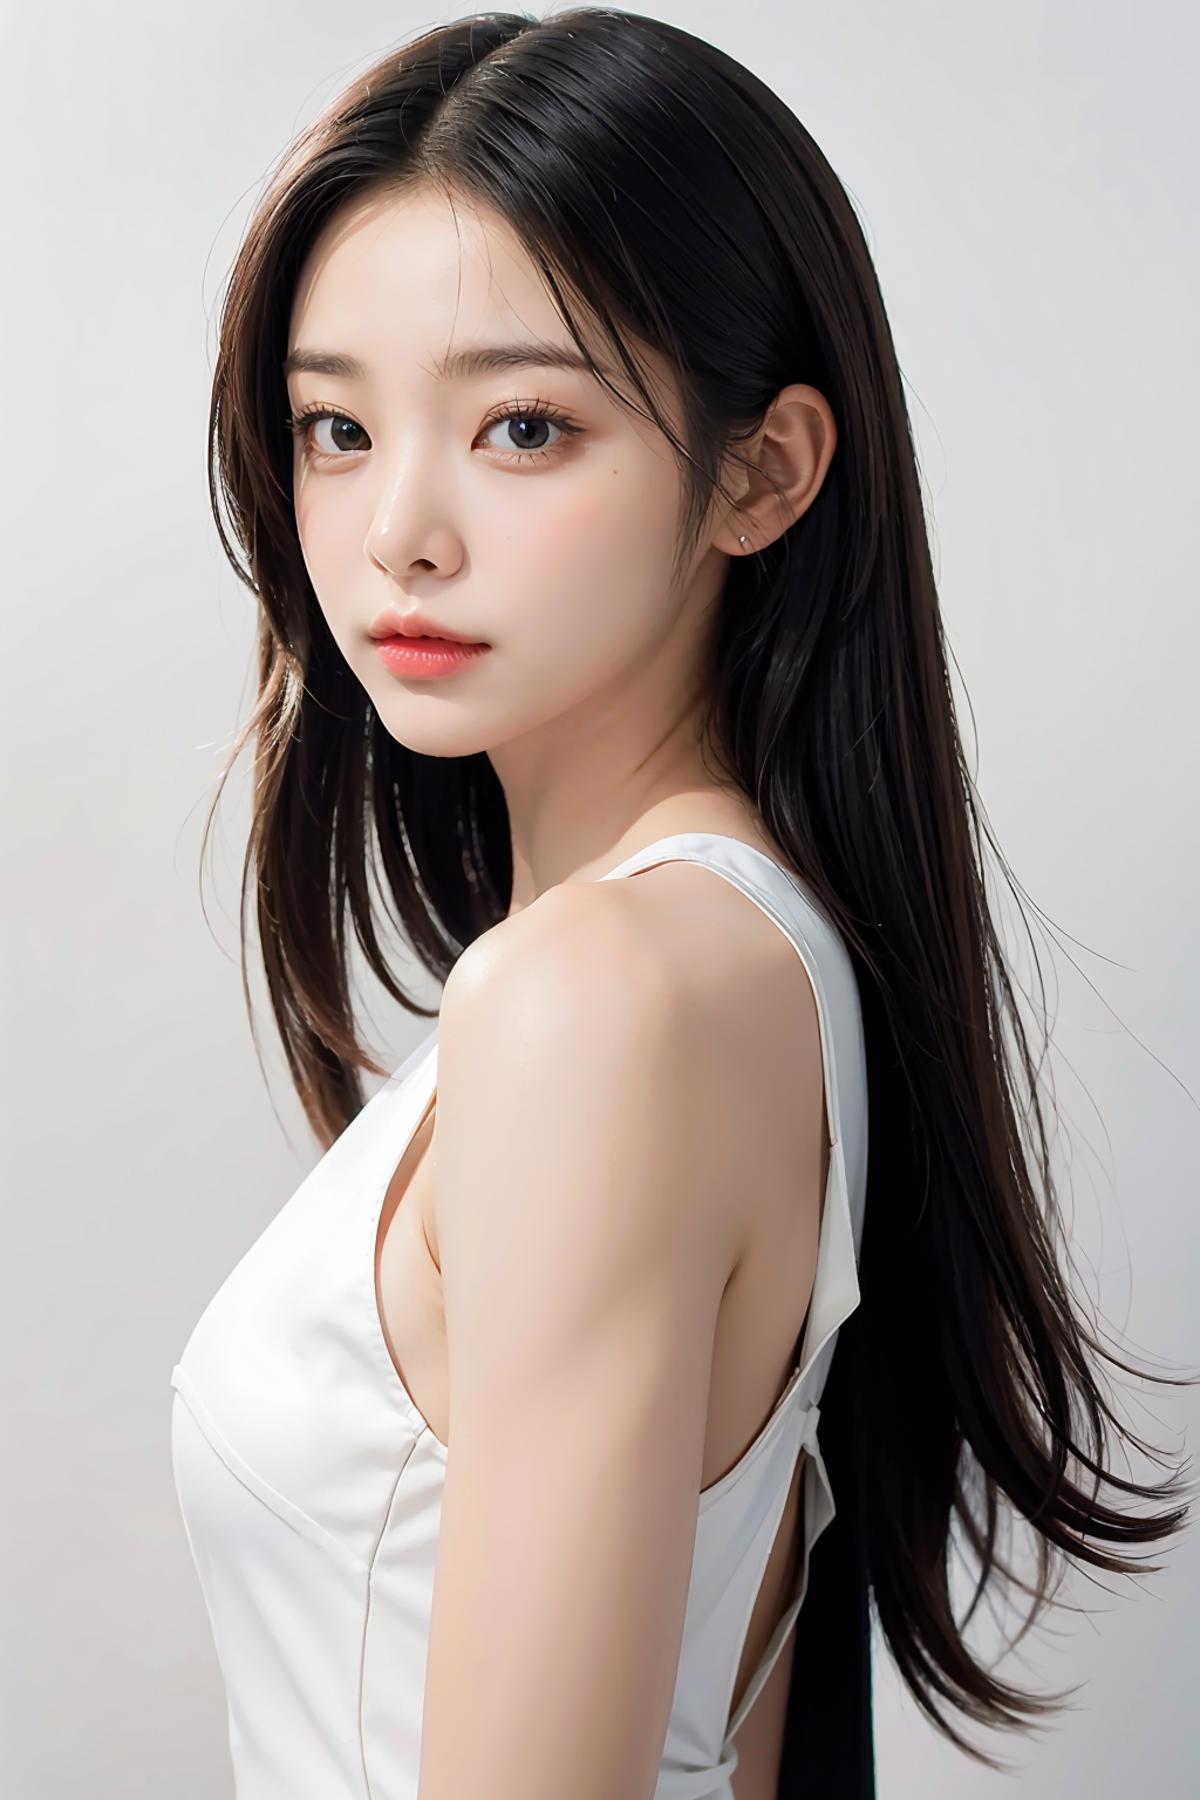 Seol In ah Actress (Korean) image by Steven_Rogers_TH